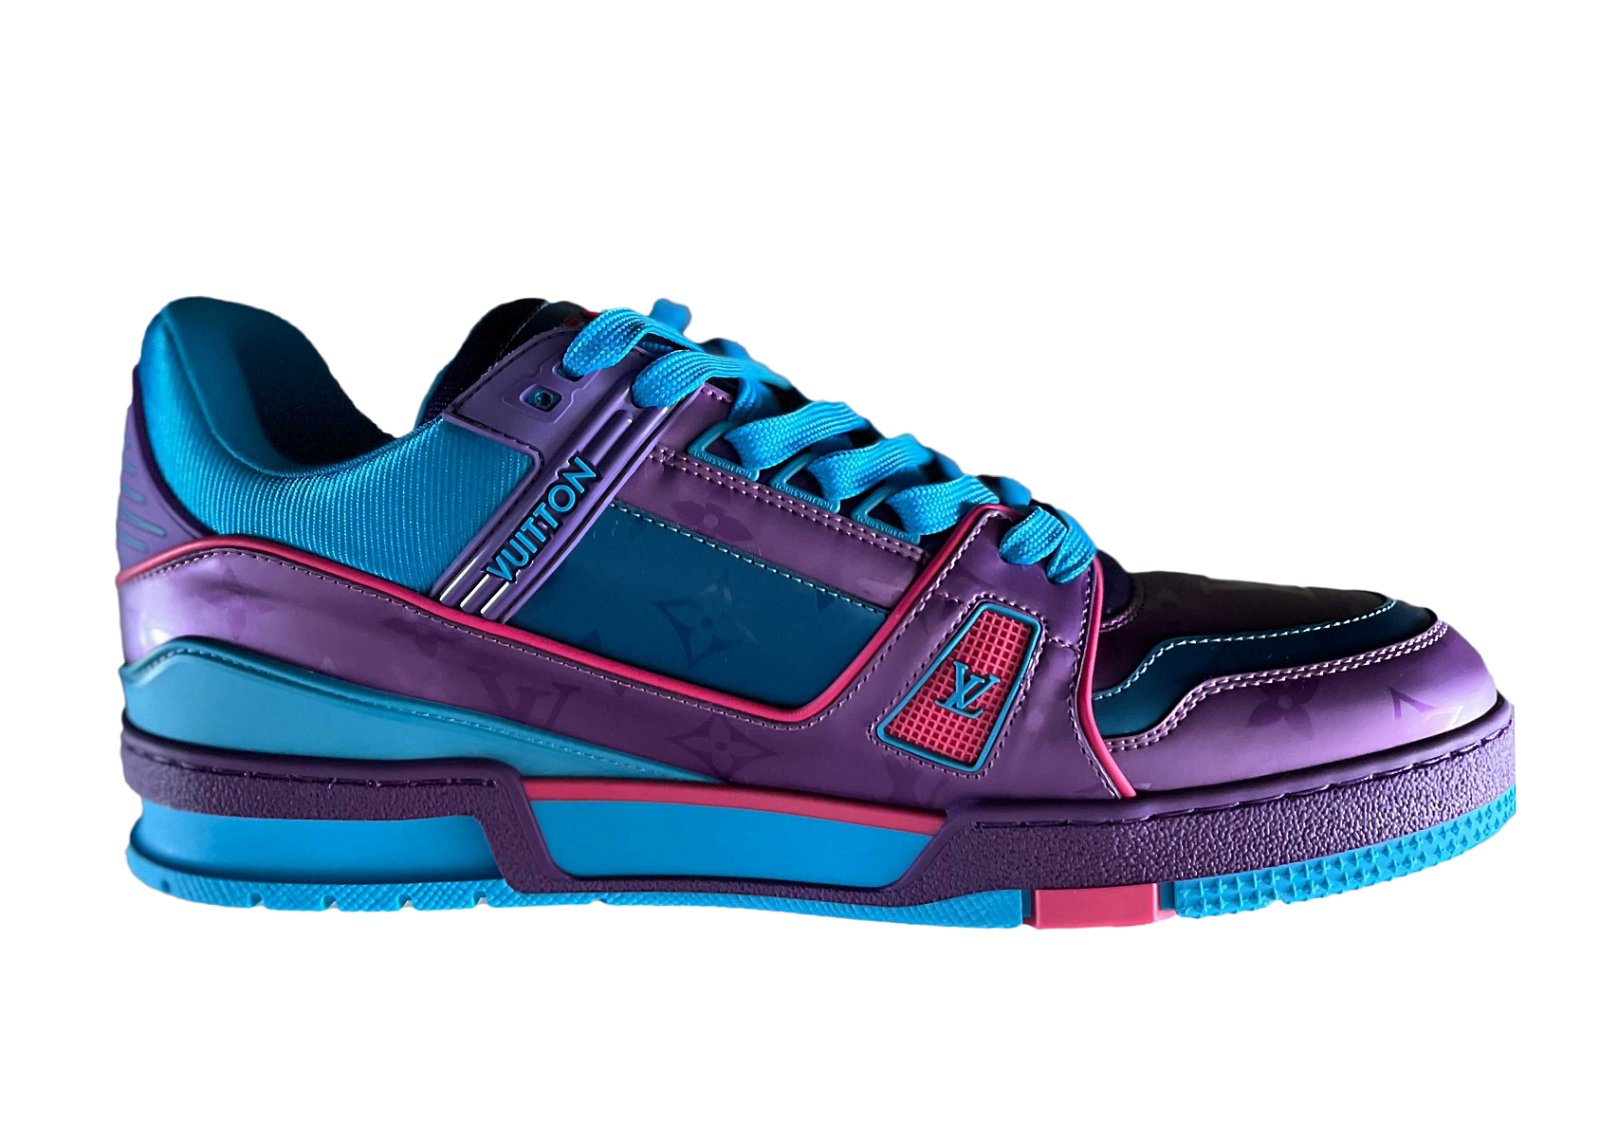 Louis Vuitton Trainer Purple Teal Metallic sneakers